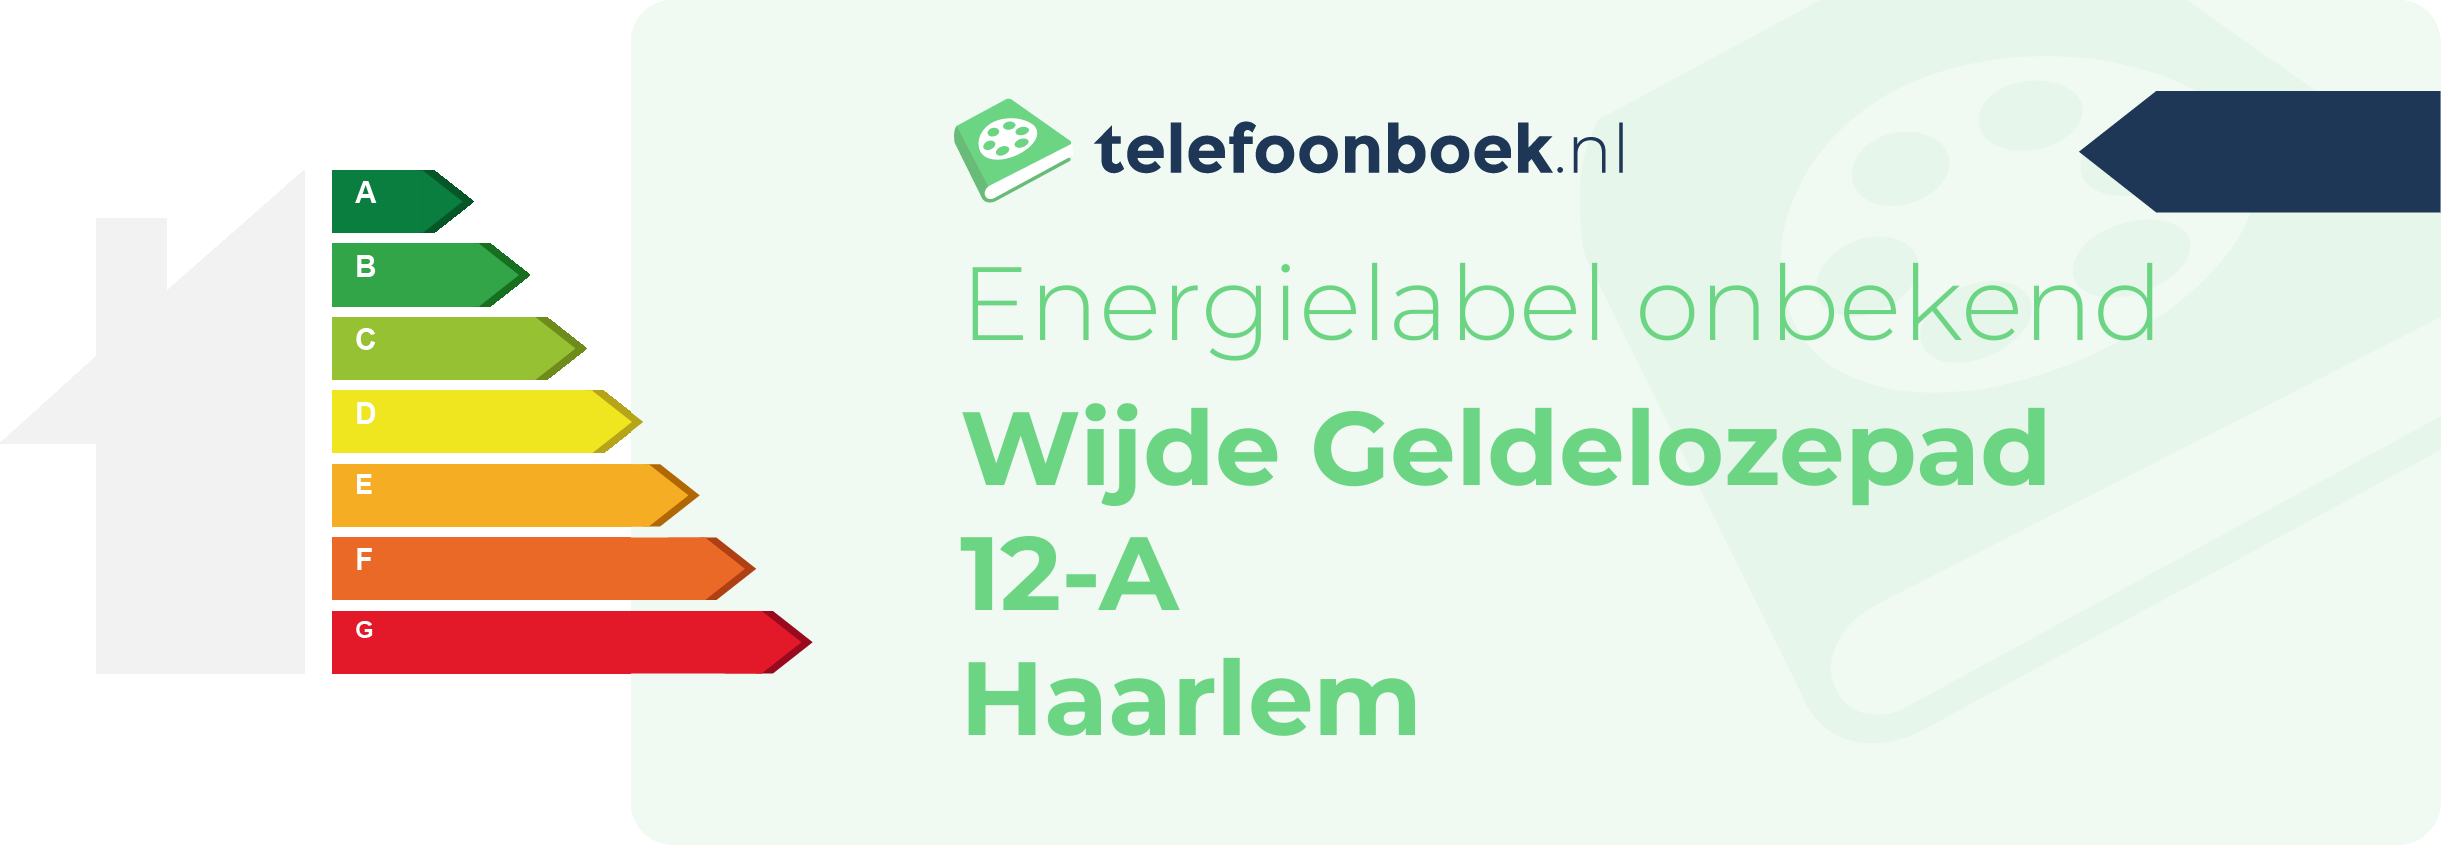 Energielabel Wijde Geldelozepad 12-A Haarlem